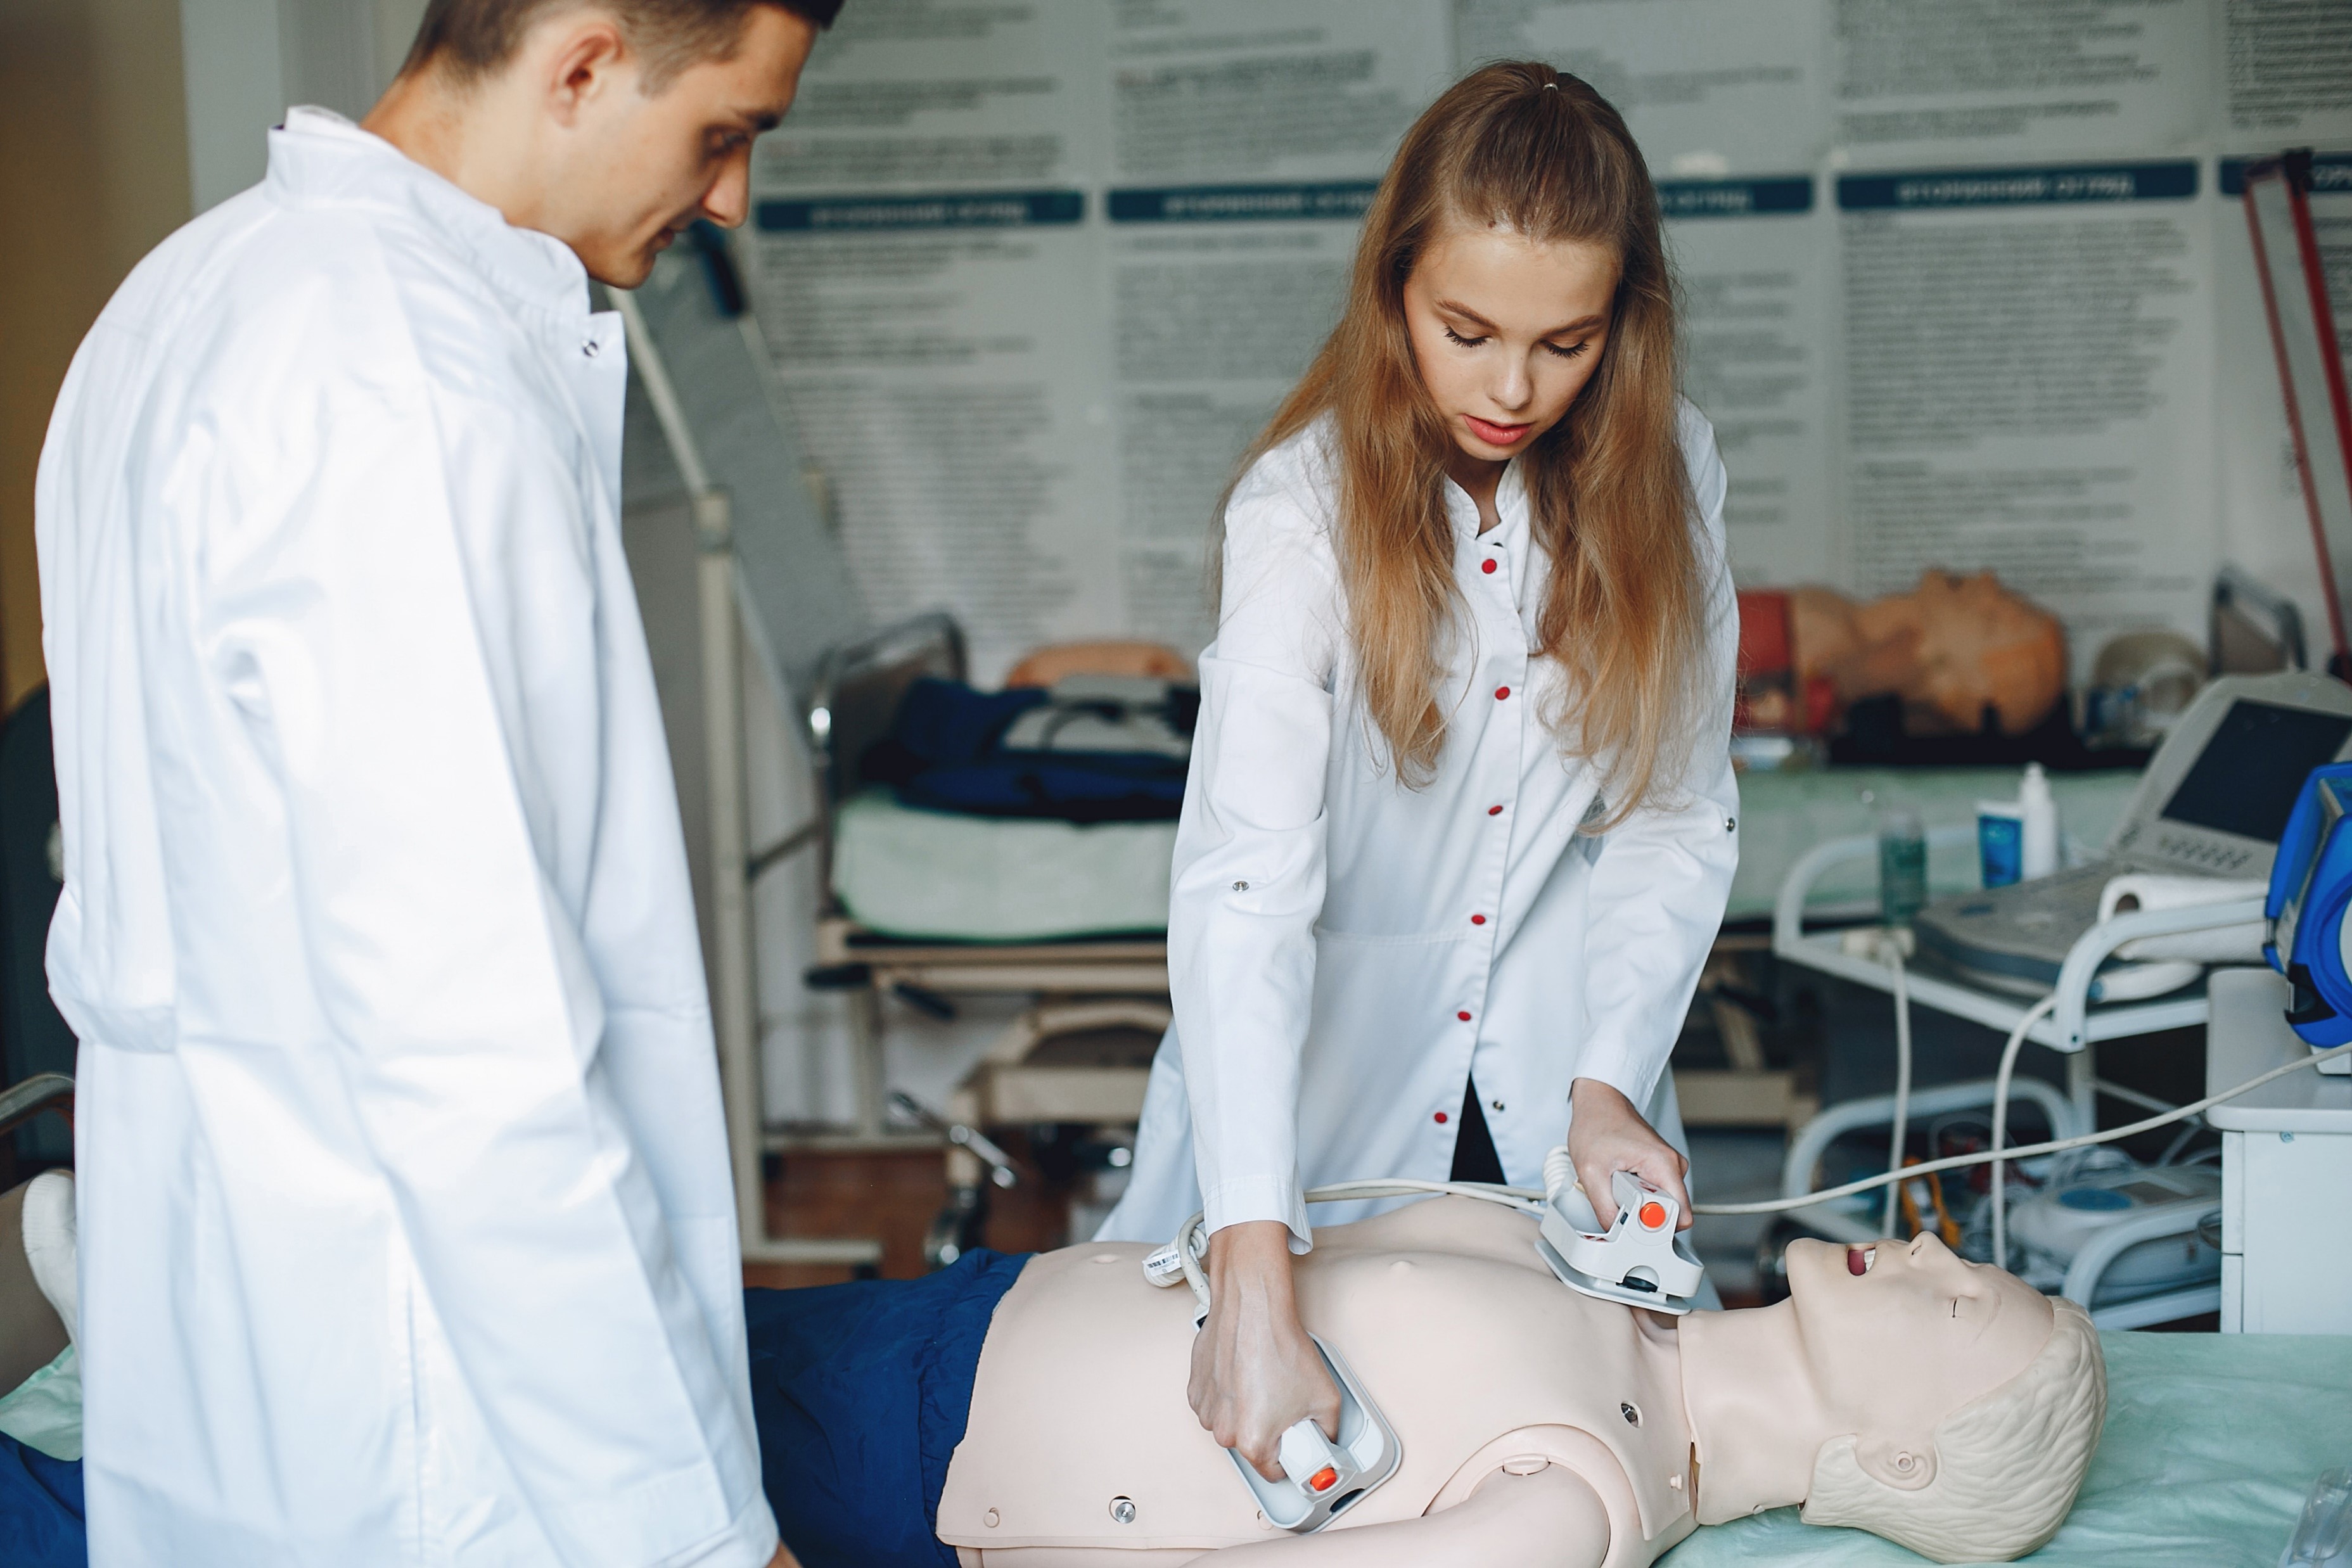 Nursing students conduct rescuscitation